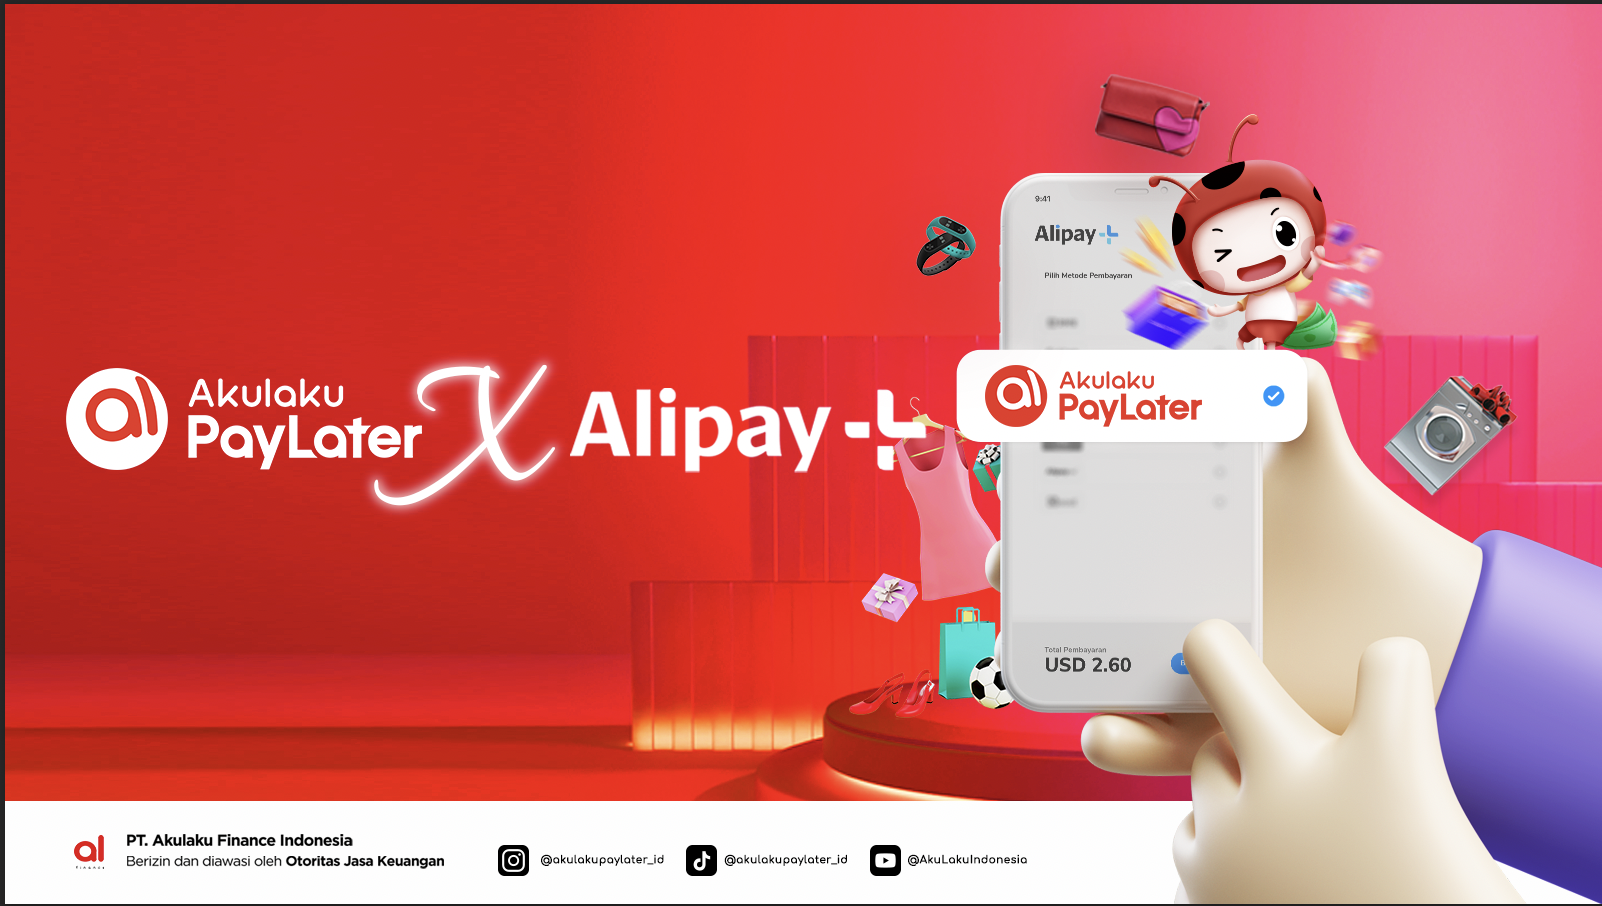 Alipay+服务再添先享后付新方式 中国技术助力东南亚跨境消费(跨境网络消费平台)